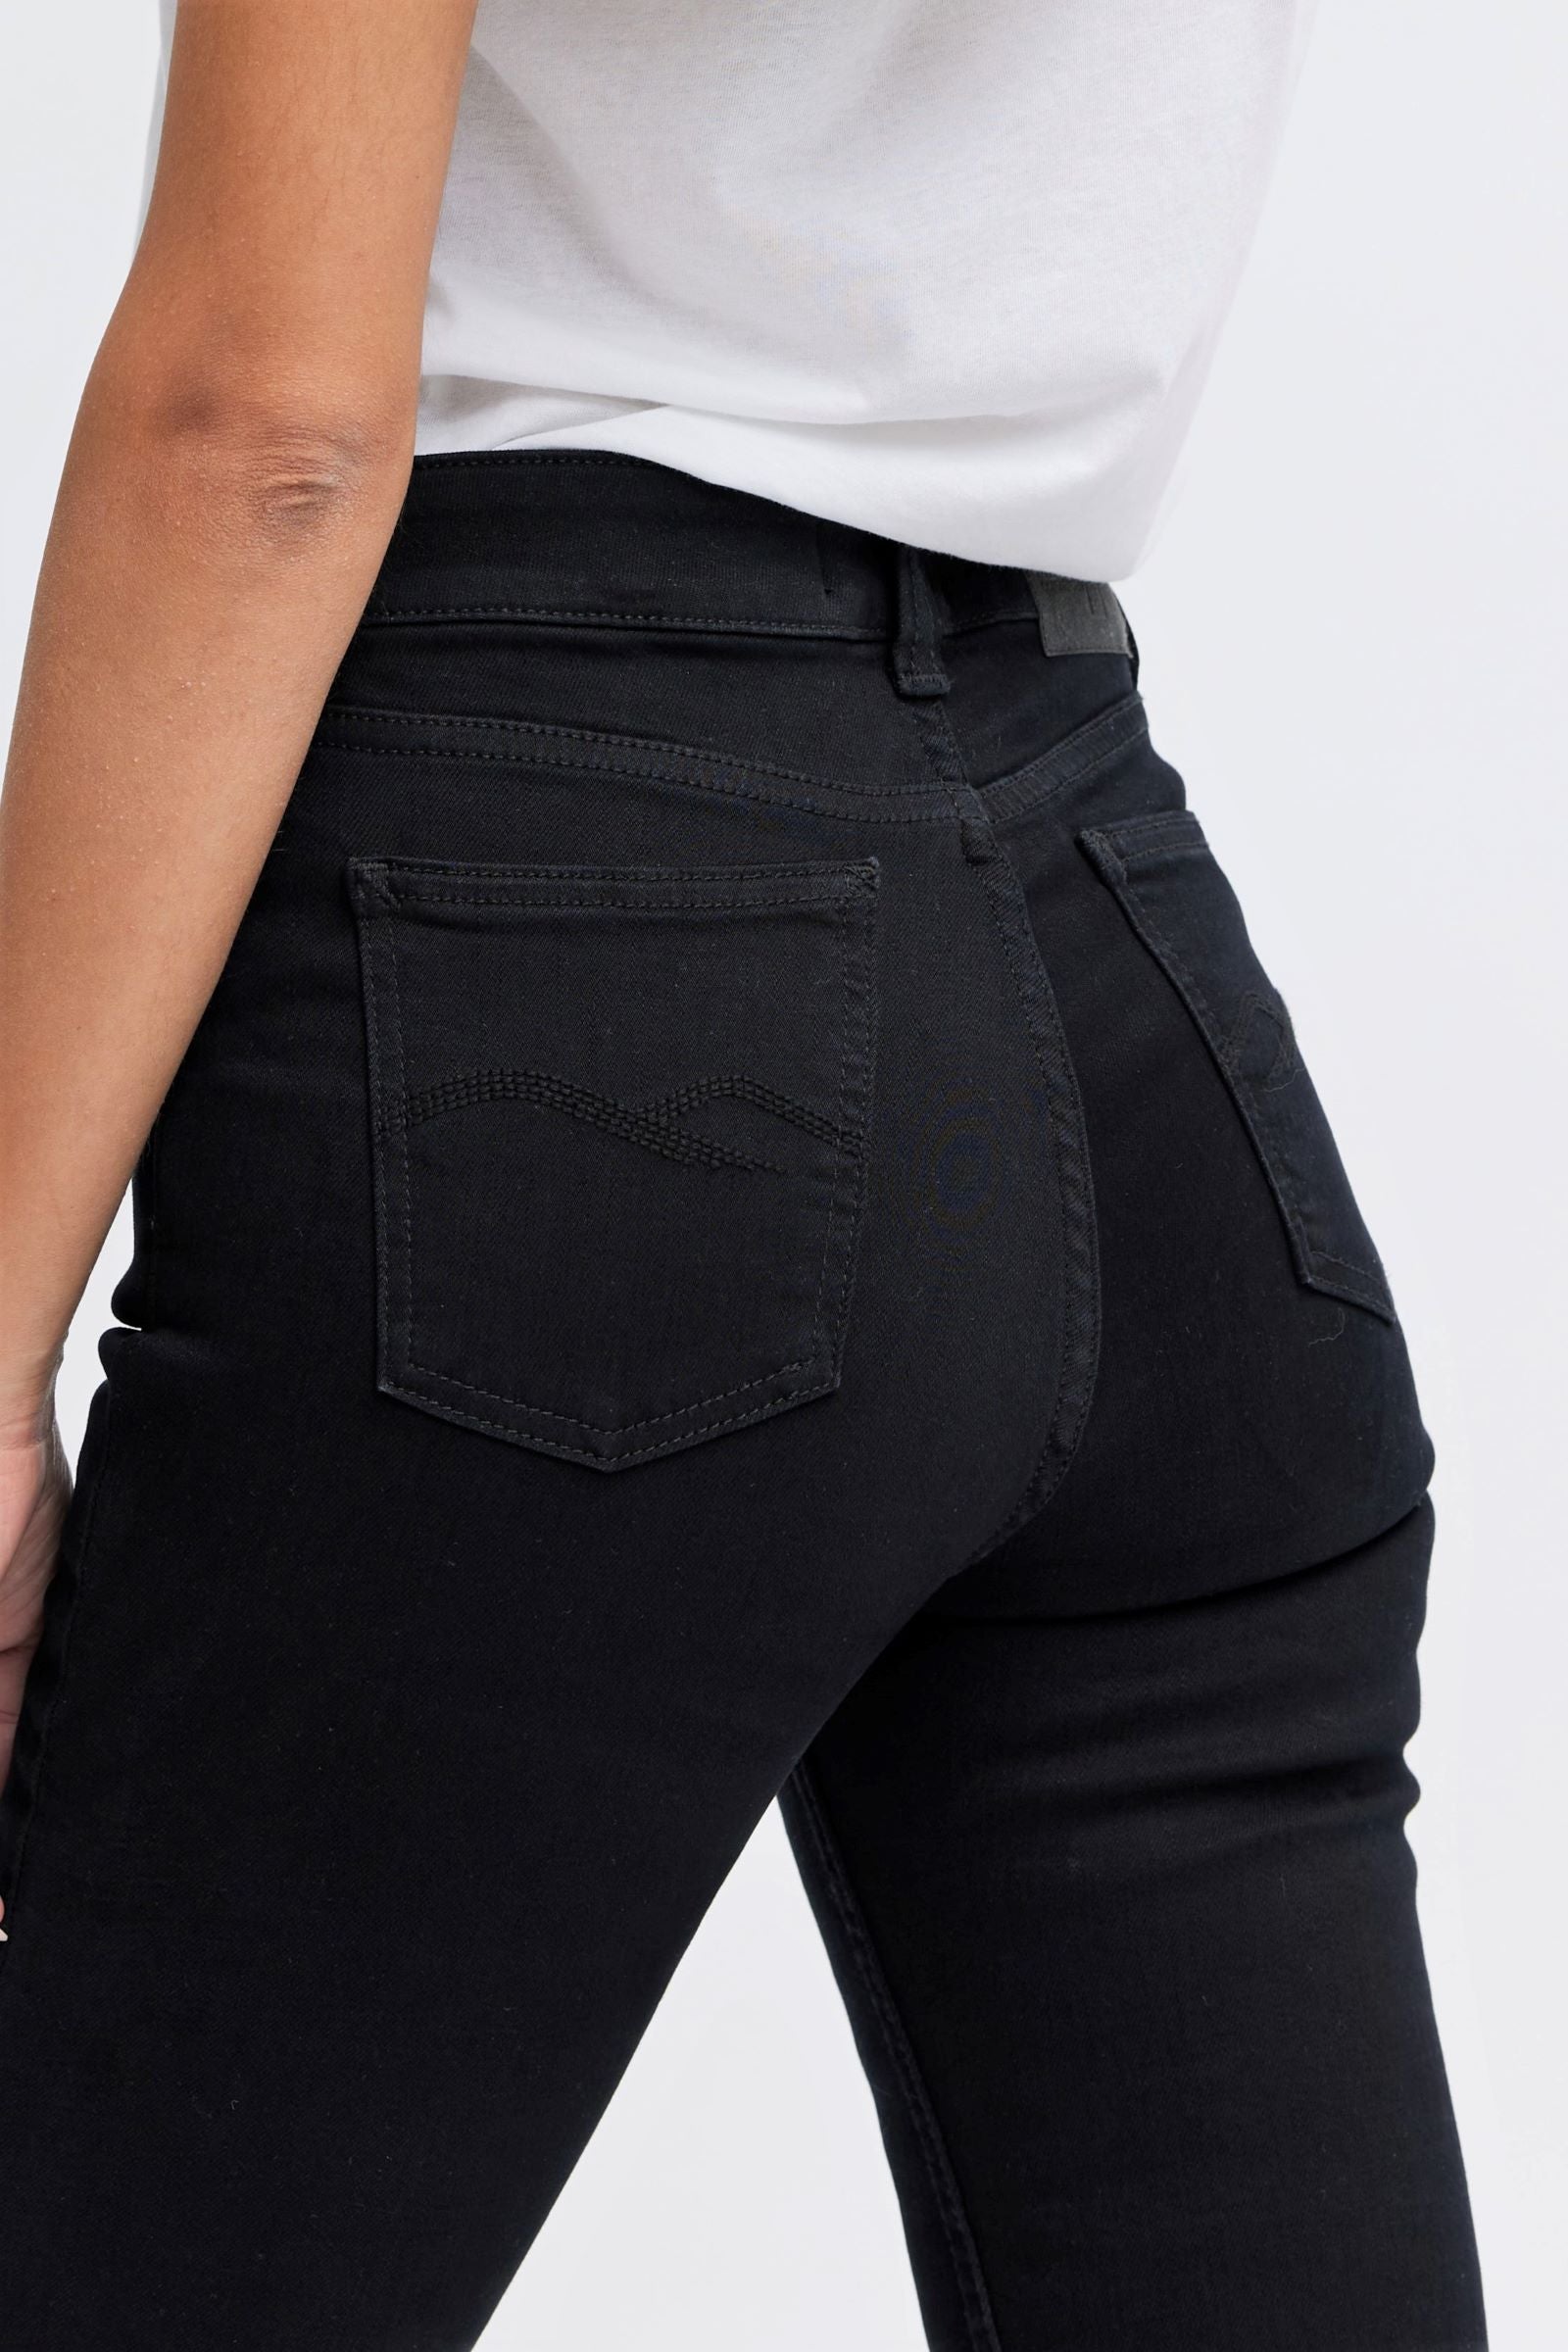 Women's black vegan jeans - organic cotton & recycled fibers